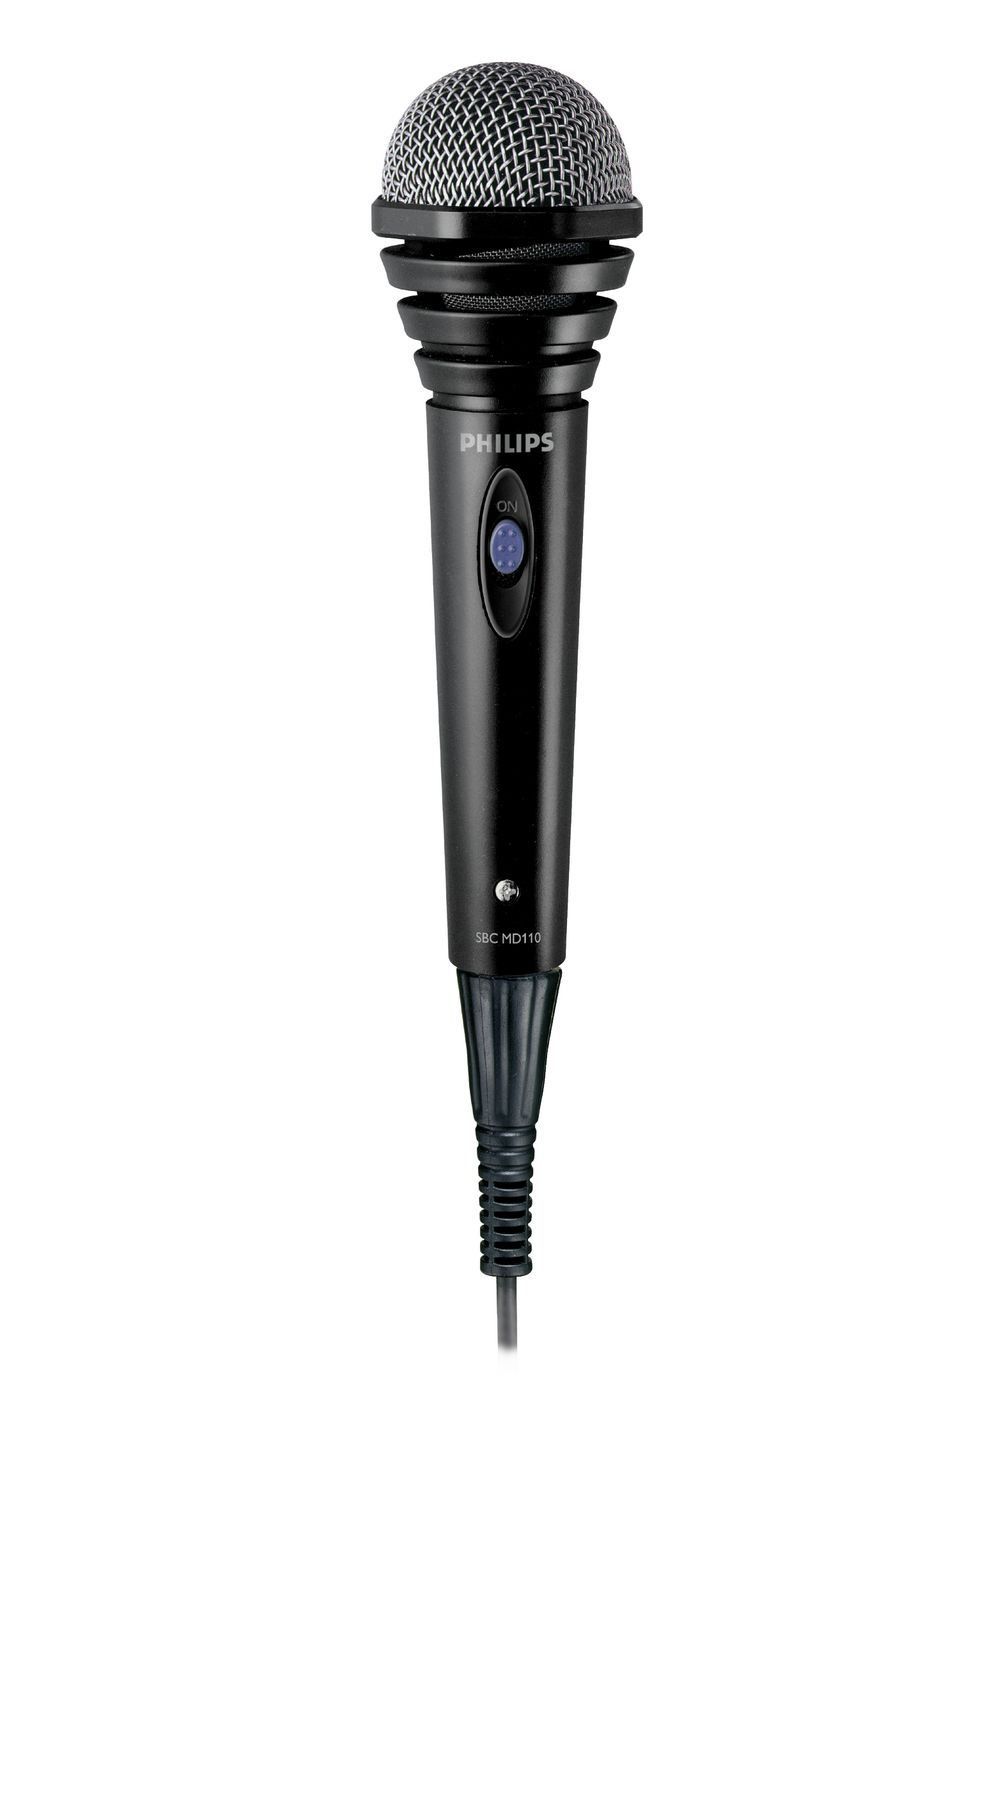 Philips Sbcmd110 Negro Microfono Con Cable